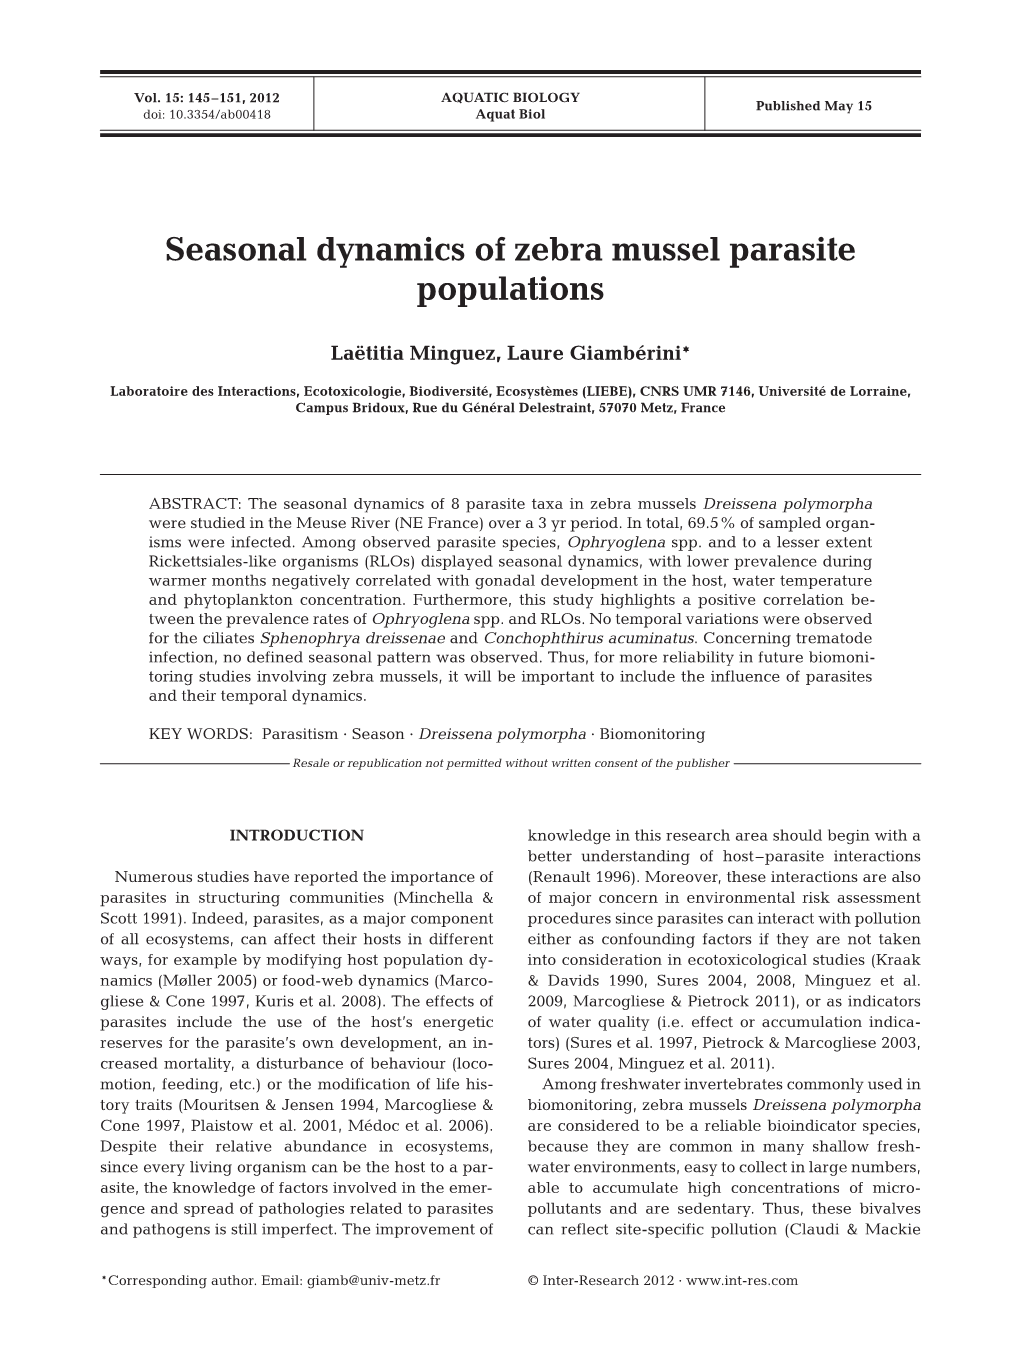 Seasonal Dynamics of Zebra Mussel Parasite Populations